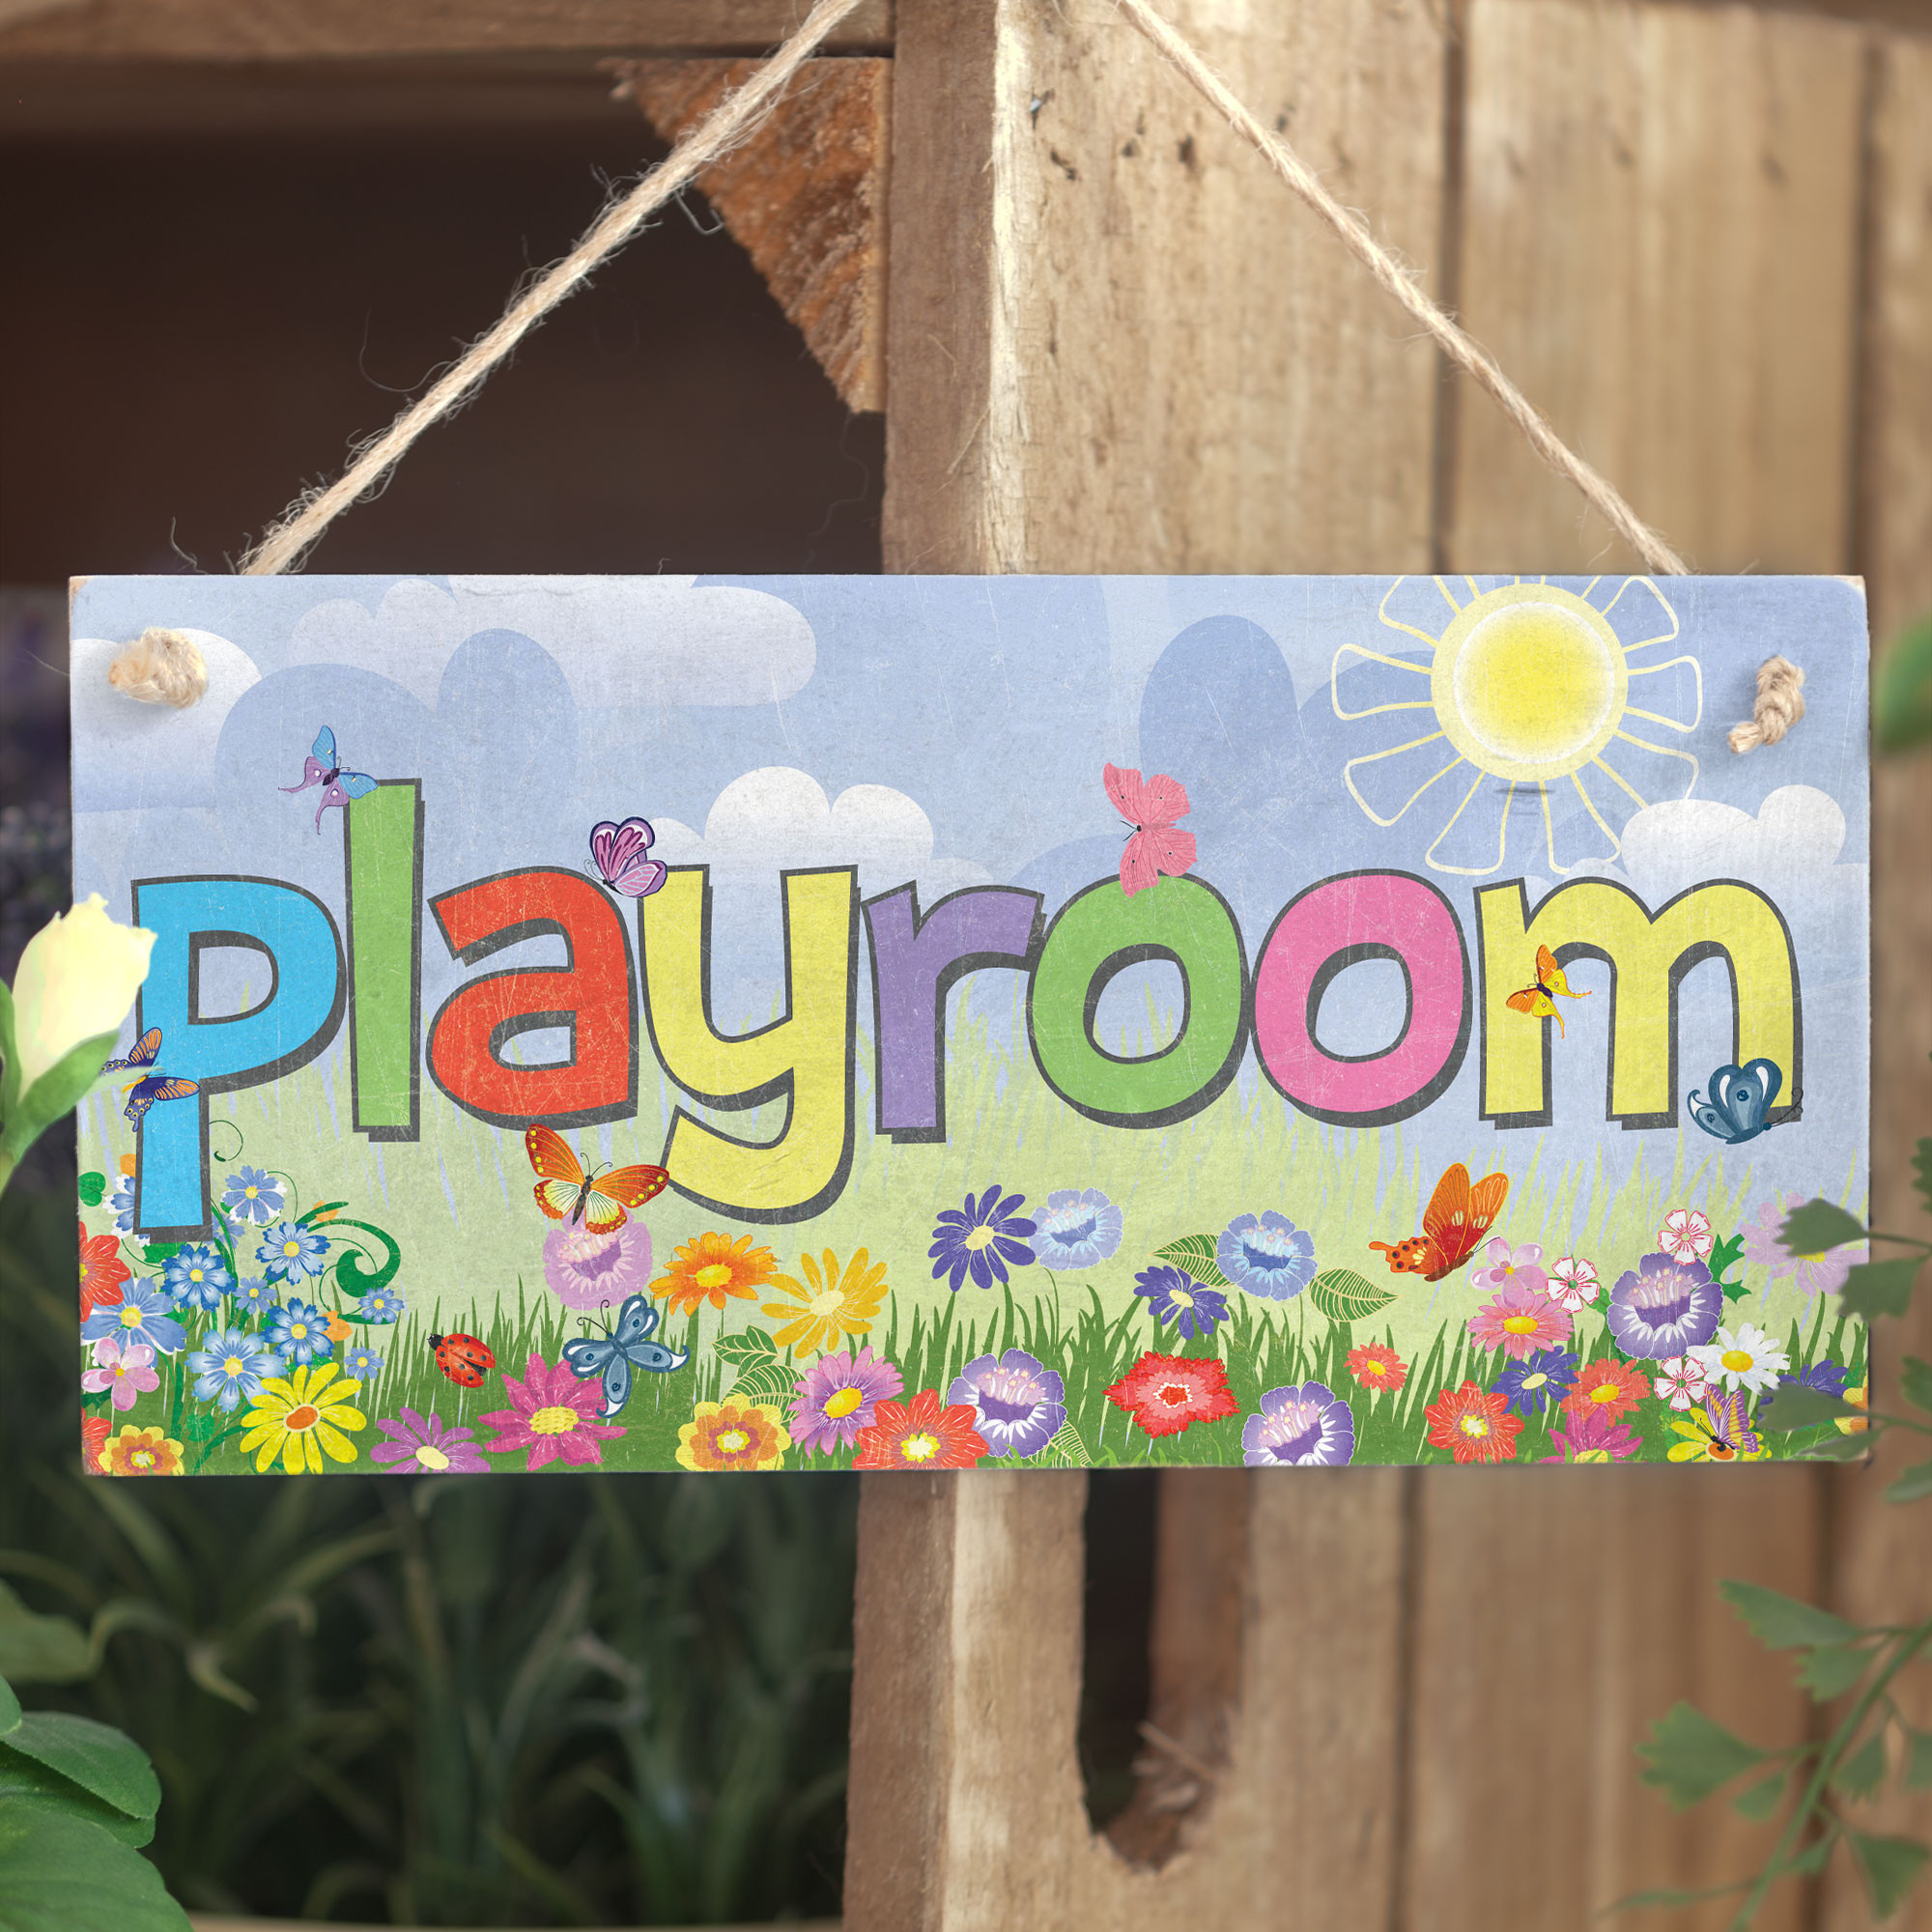 Kids Room Sign
 playroom Kids Sign Handmade Shabby Chic Wooden Door